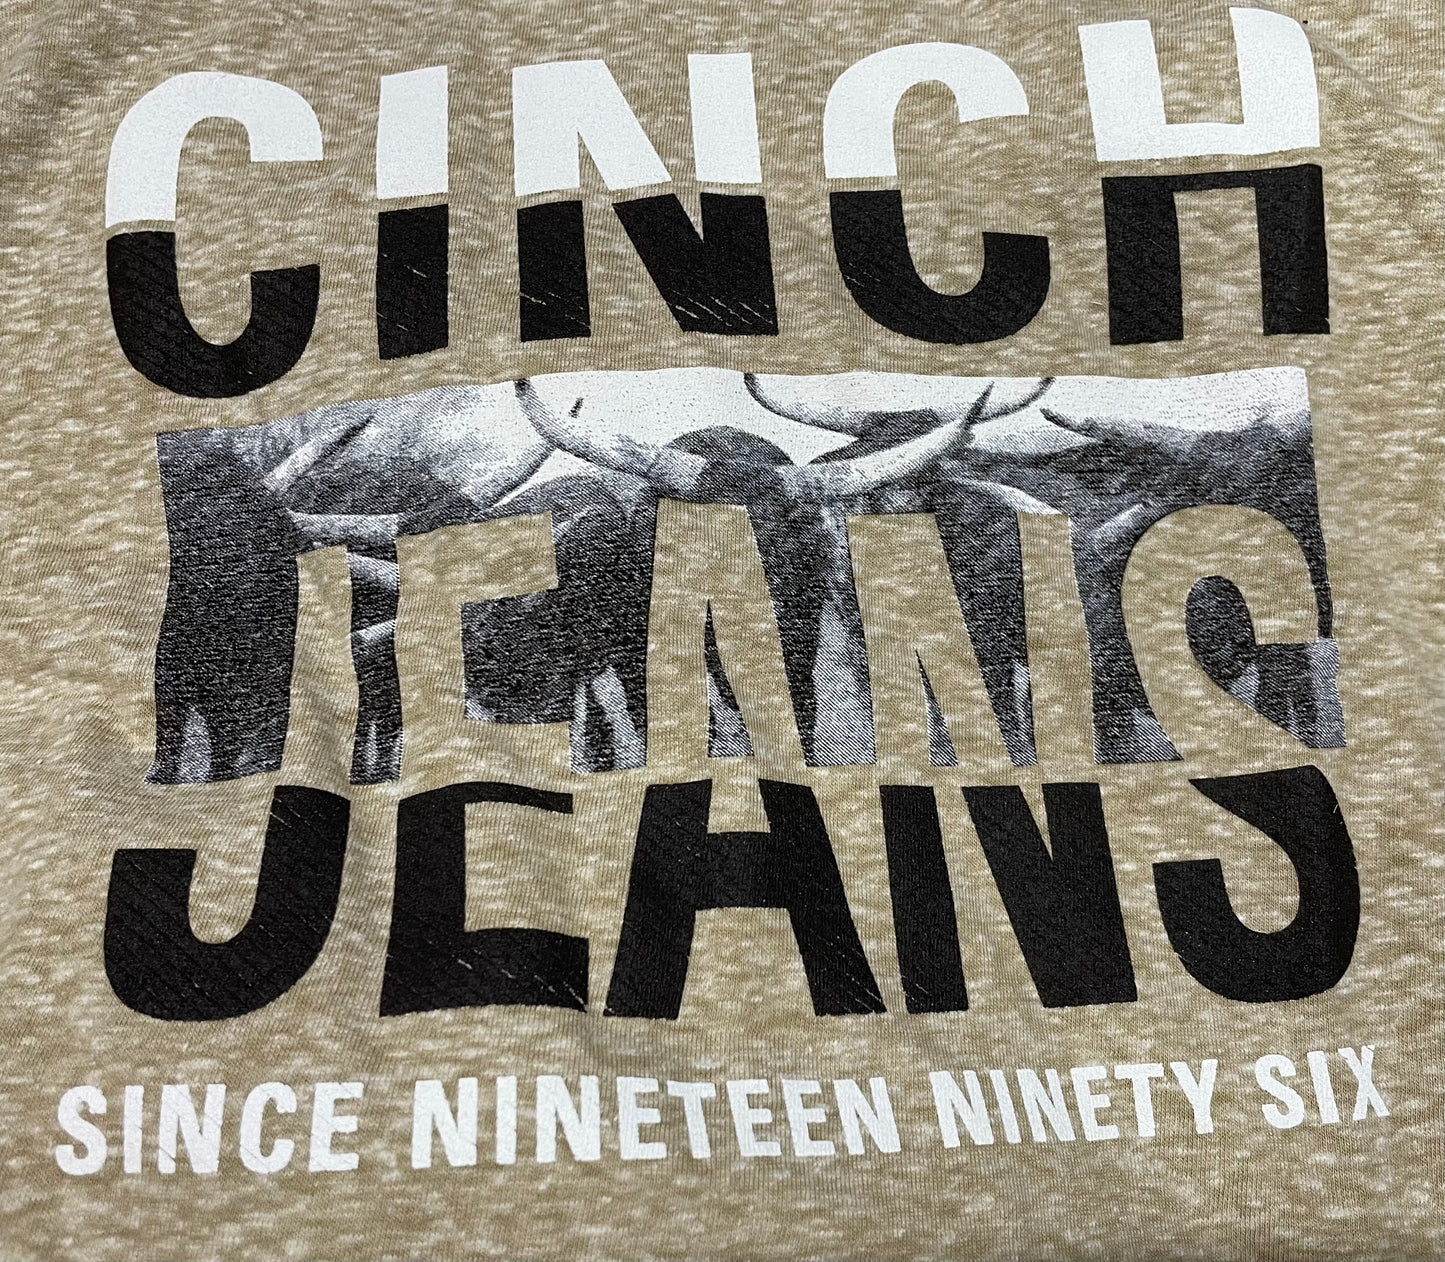 Cinch Boys Khaki Tee Shirt - MTT7670111